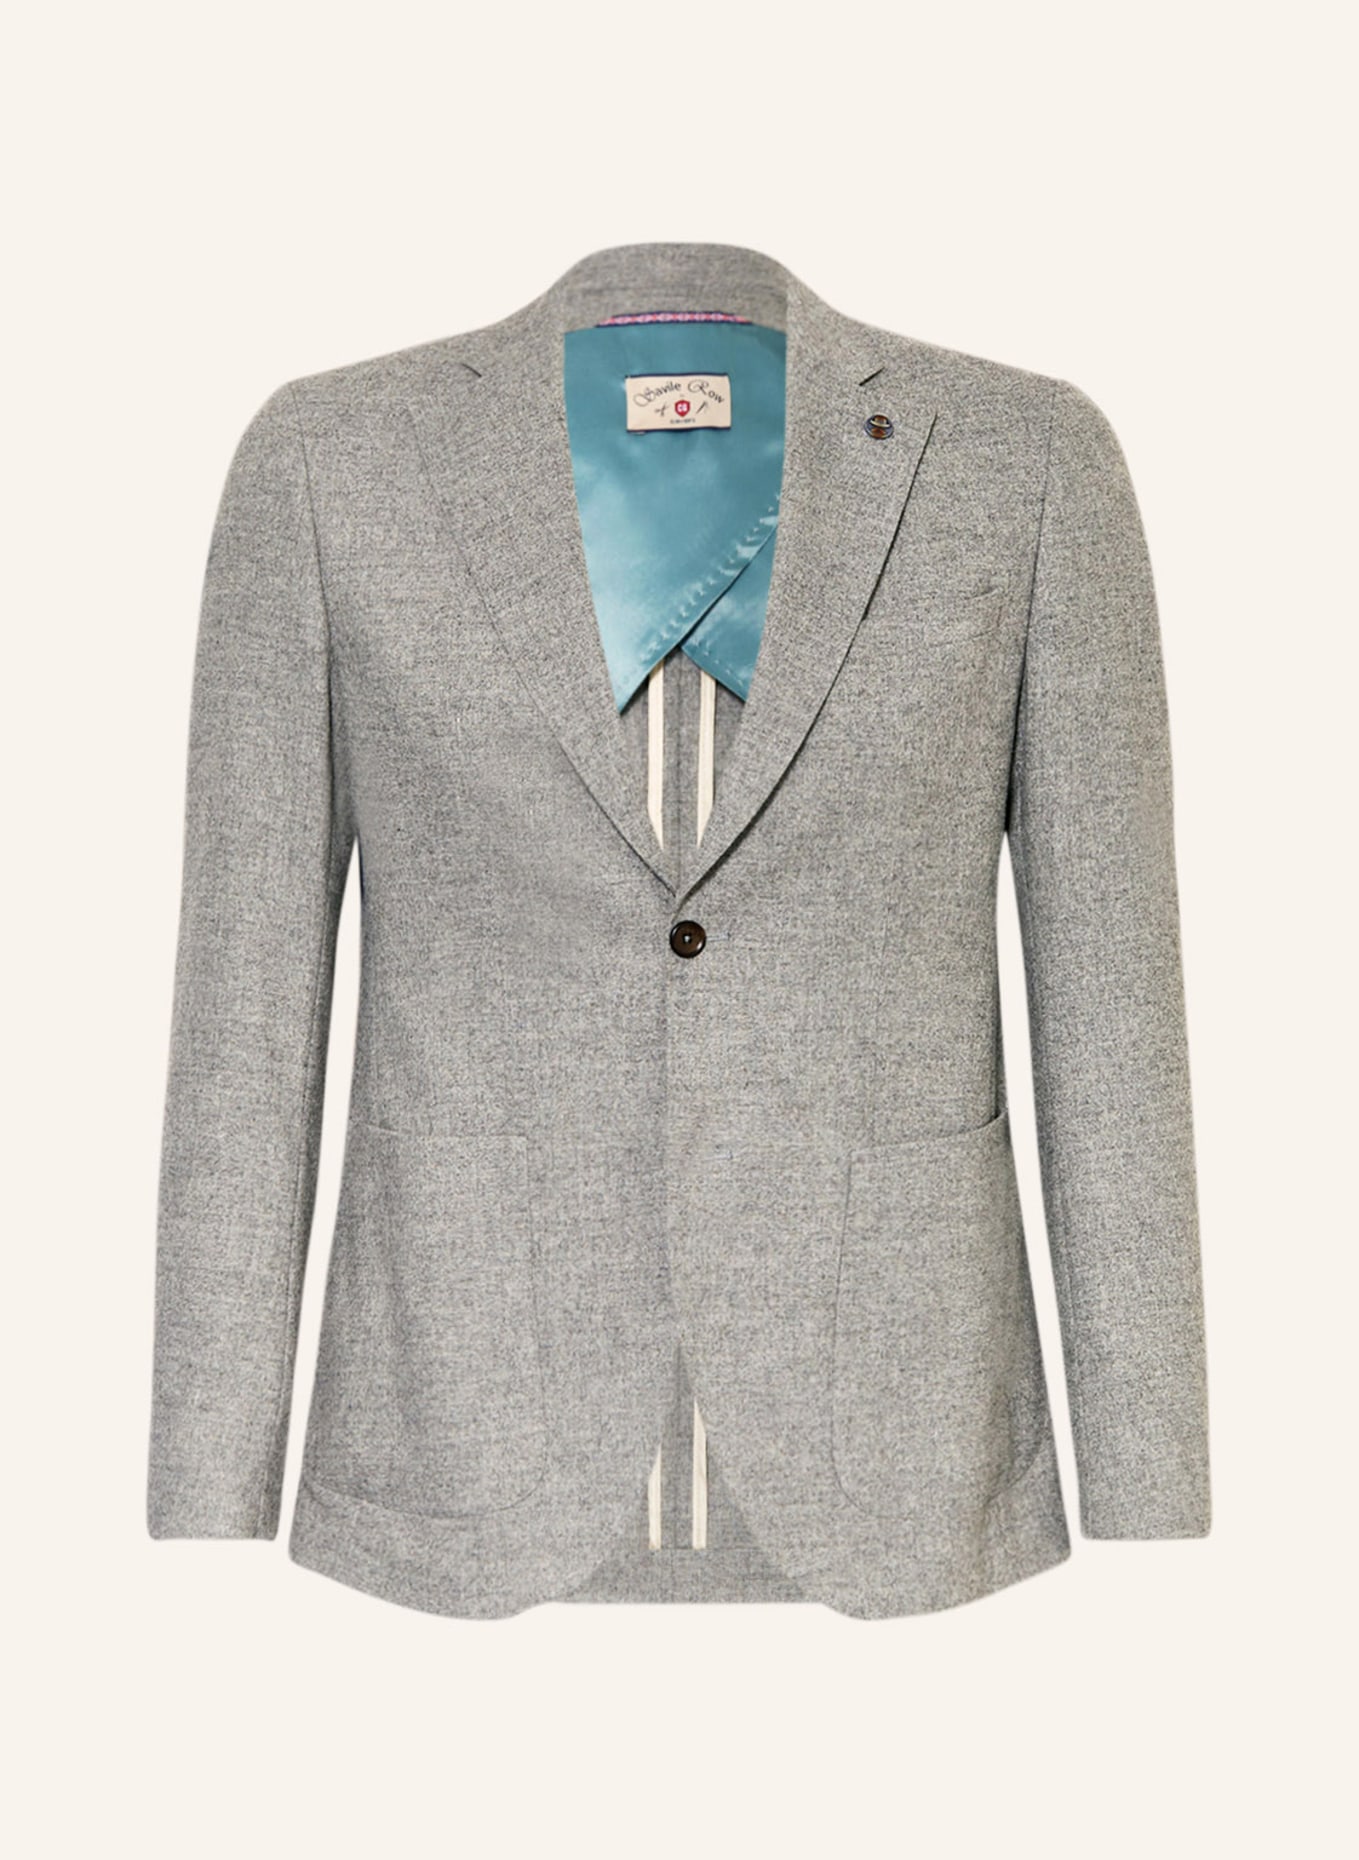 CG - CLUB of GENTS Suit jacket CG CONLEY slim fit, Color: 81 grau hell (Image 1)